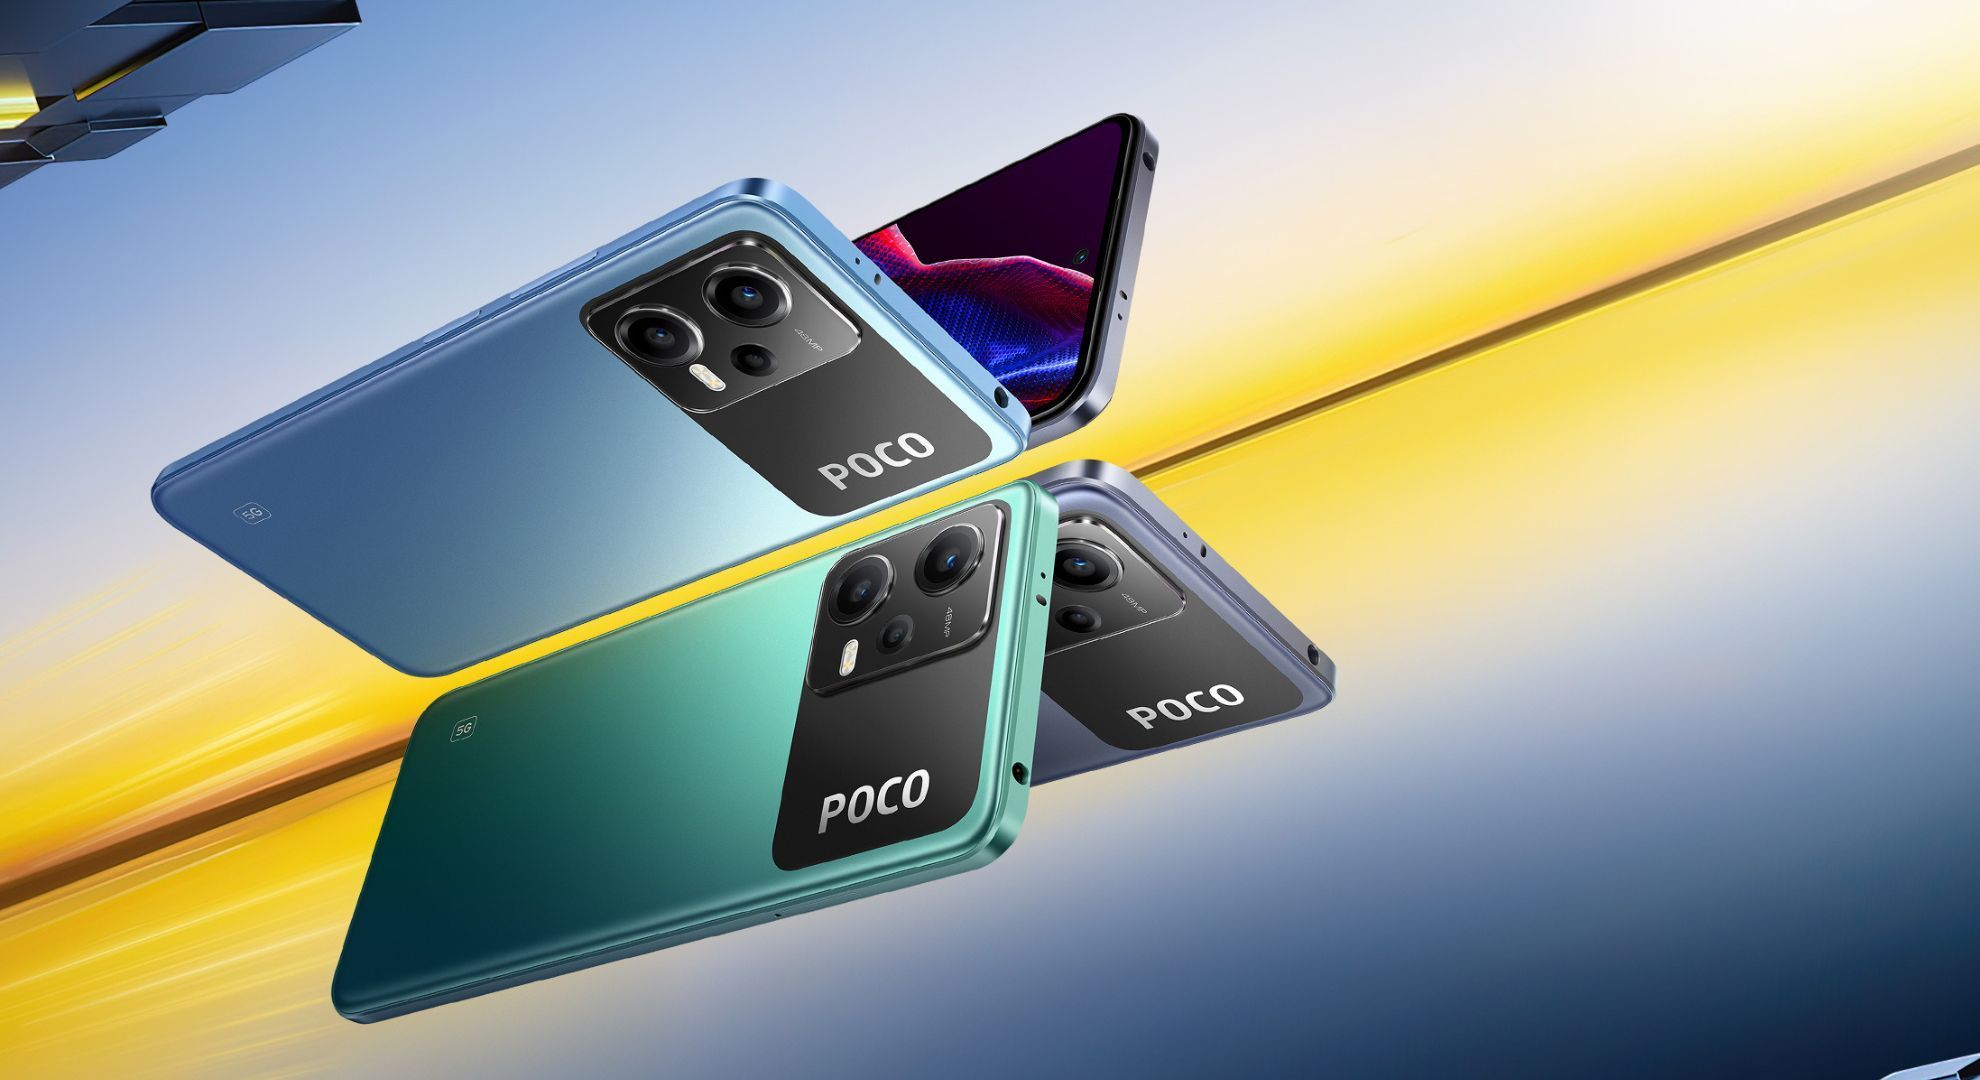 POCO X3 NFC - Specifications